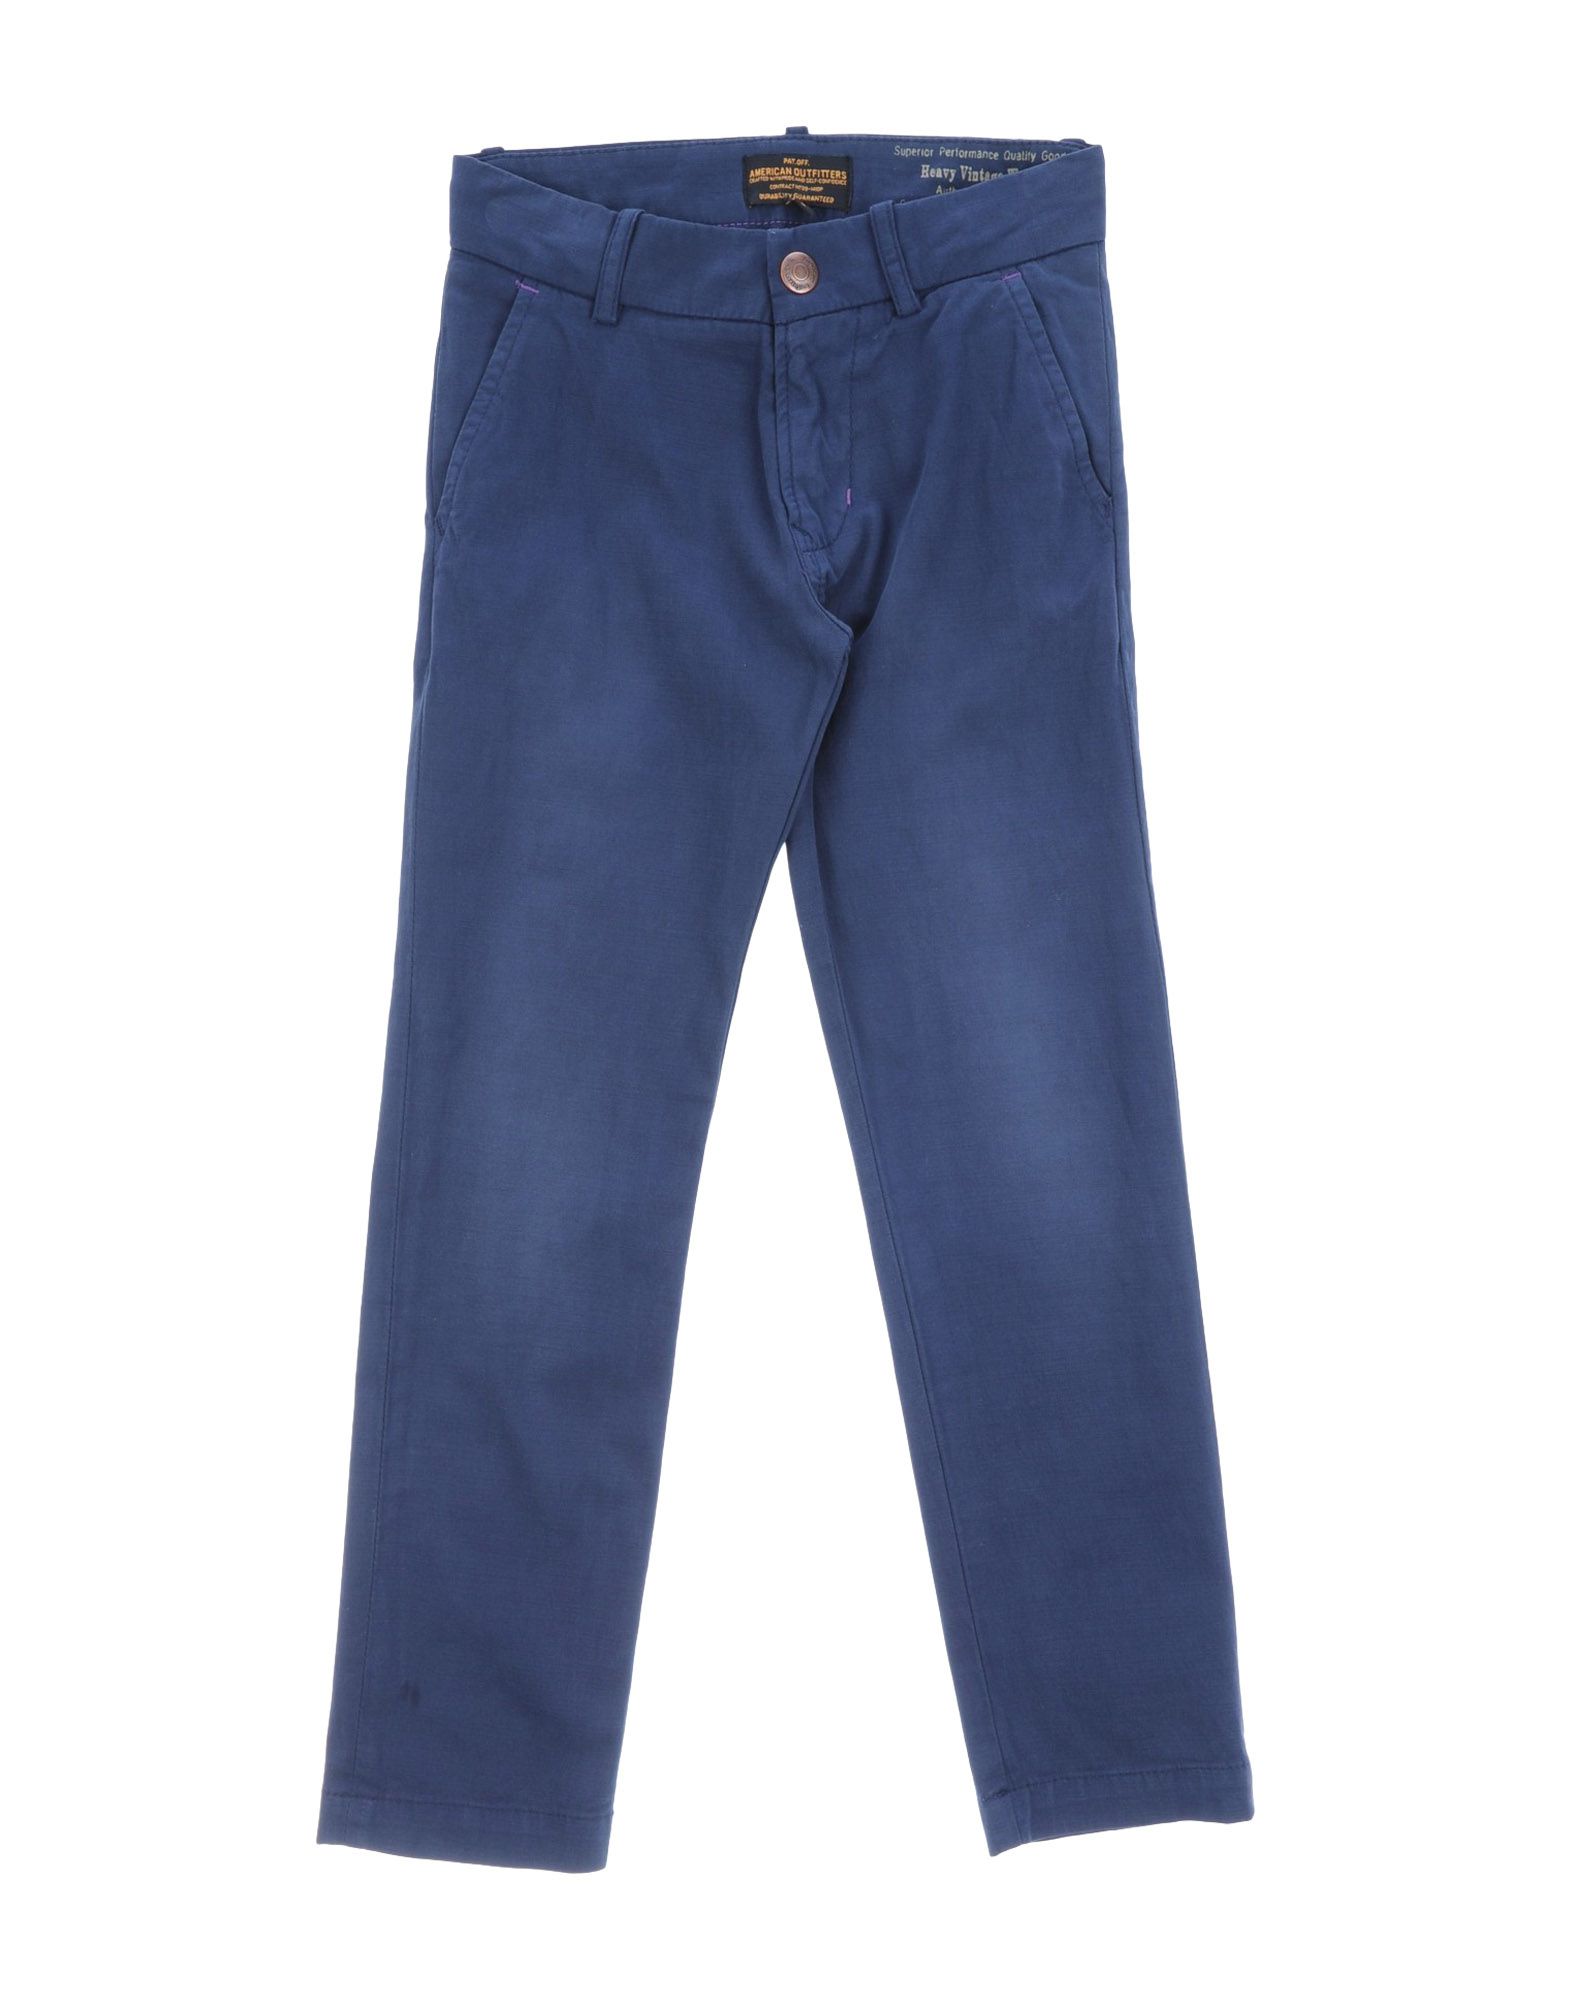 Foto American Outfitters Pantalones Niño Azul oscuro